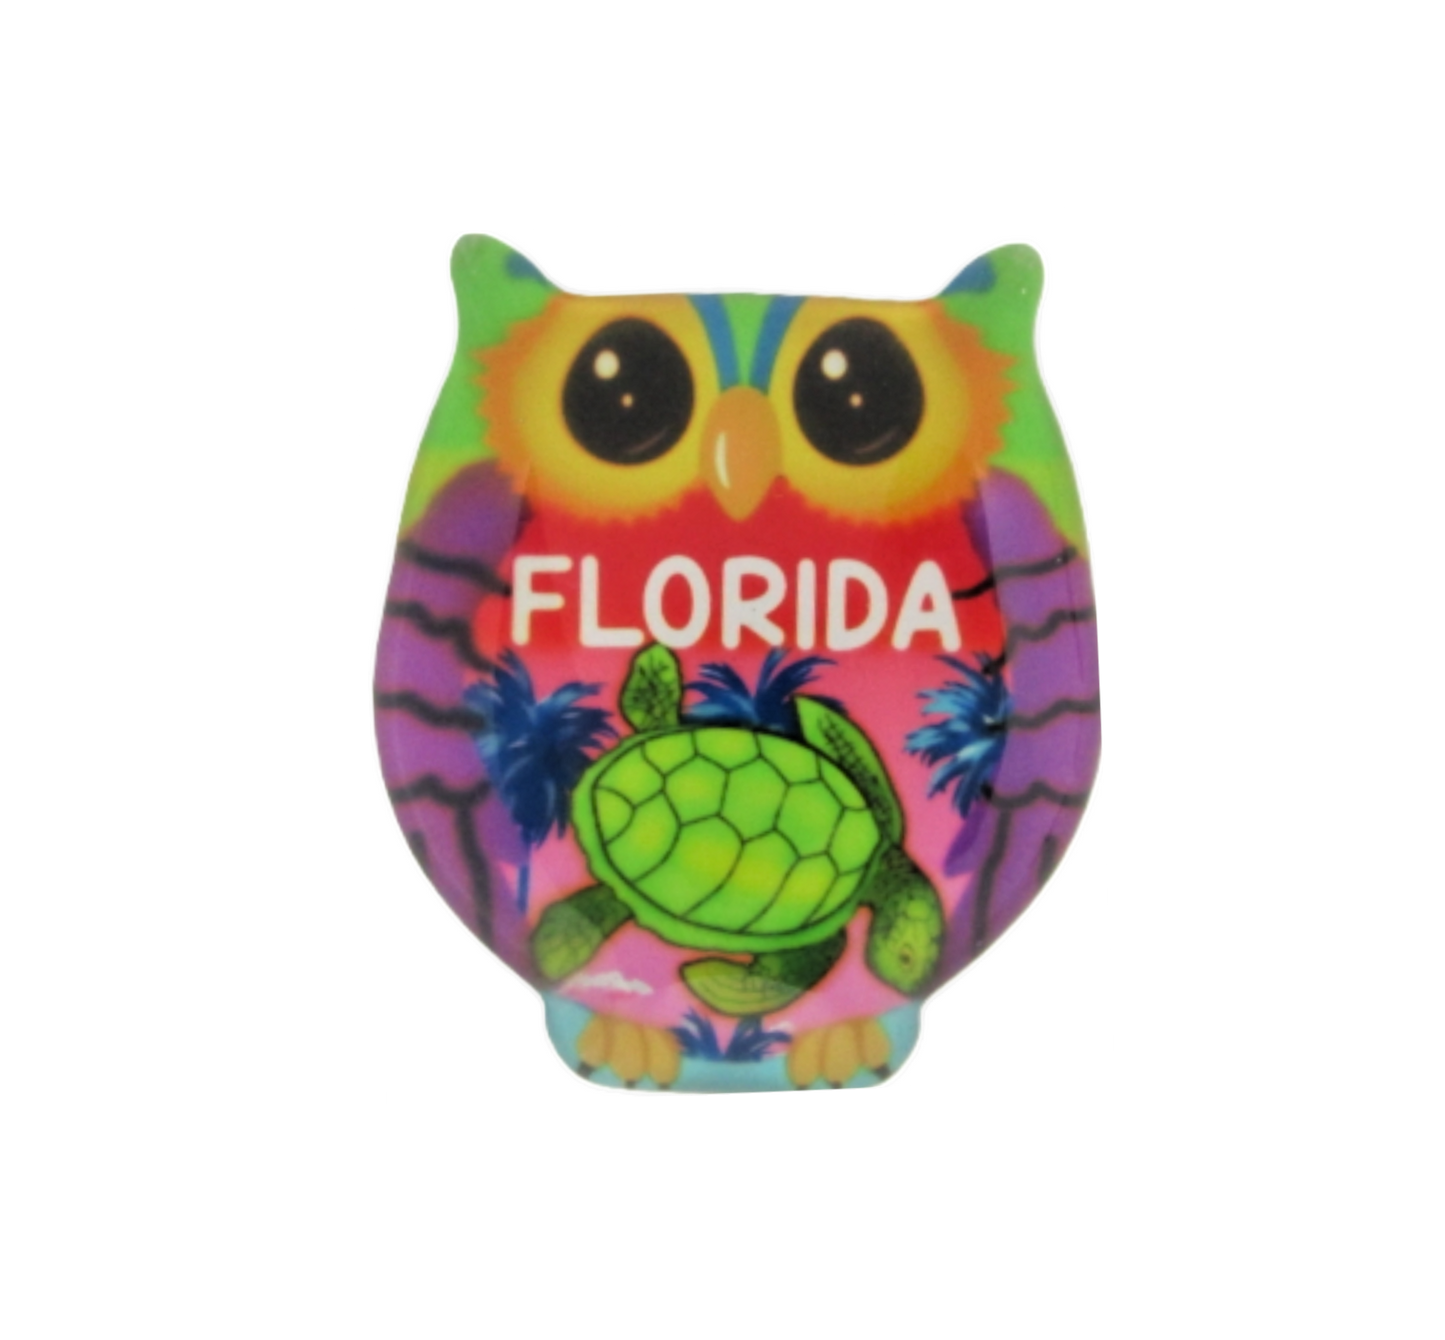 GM0101 FLORIDA GREEN OWL TURTLE